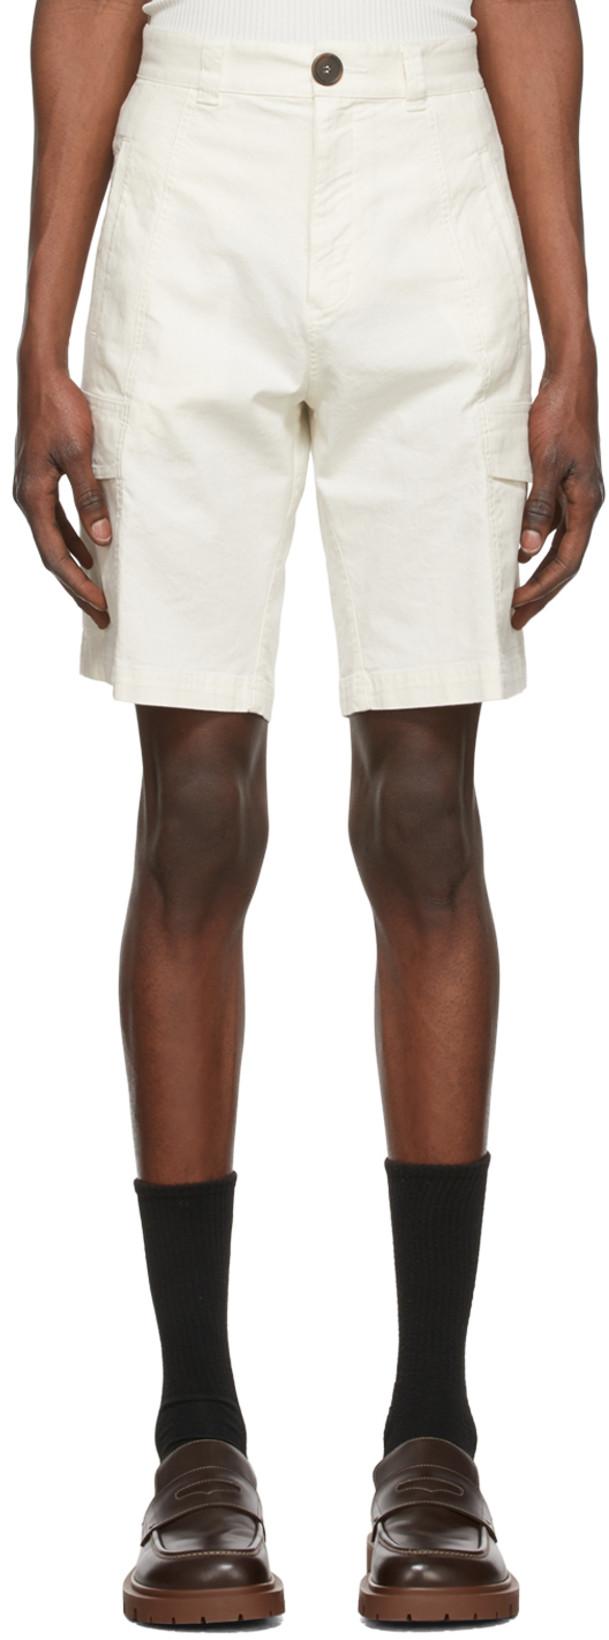 Off-White Cotton Shorts by WINNIE NEW YORK